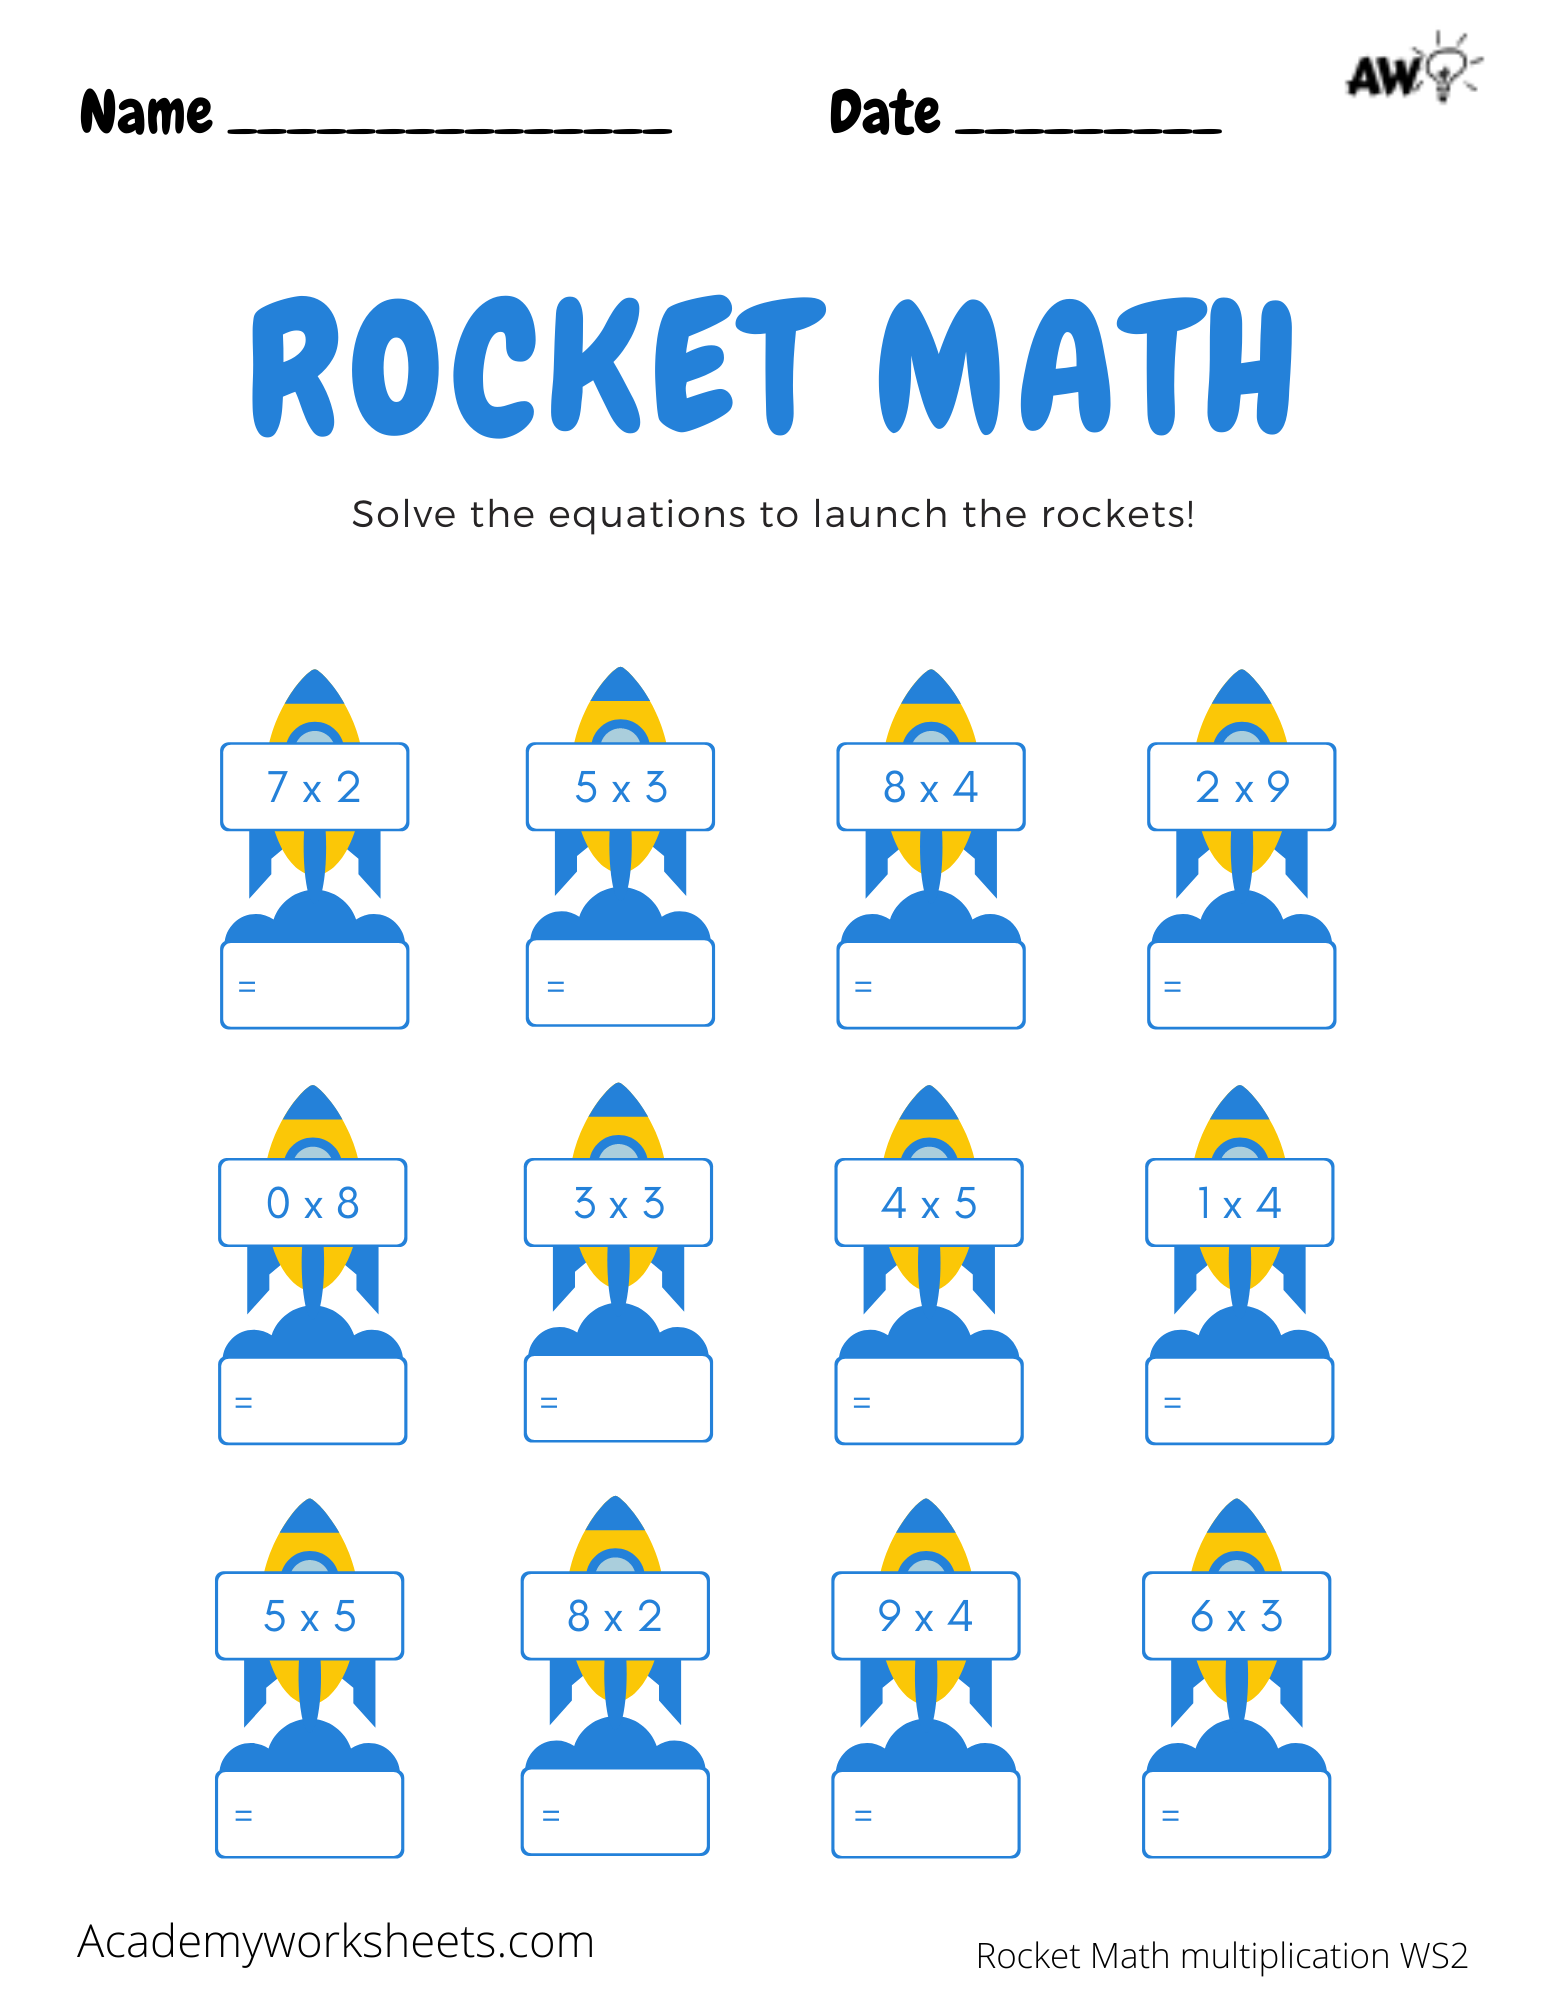 rocket-math-multiplication-academy-worksheets